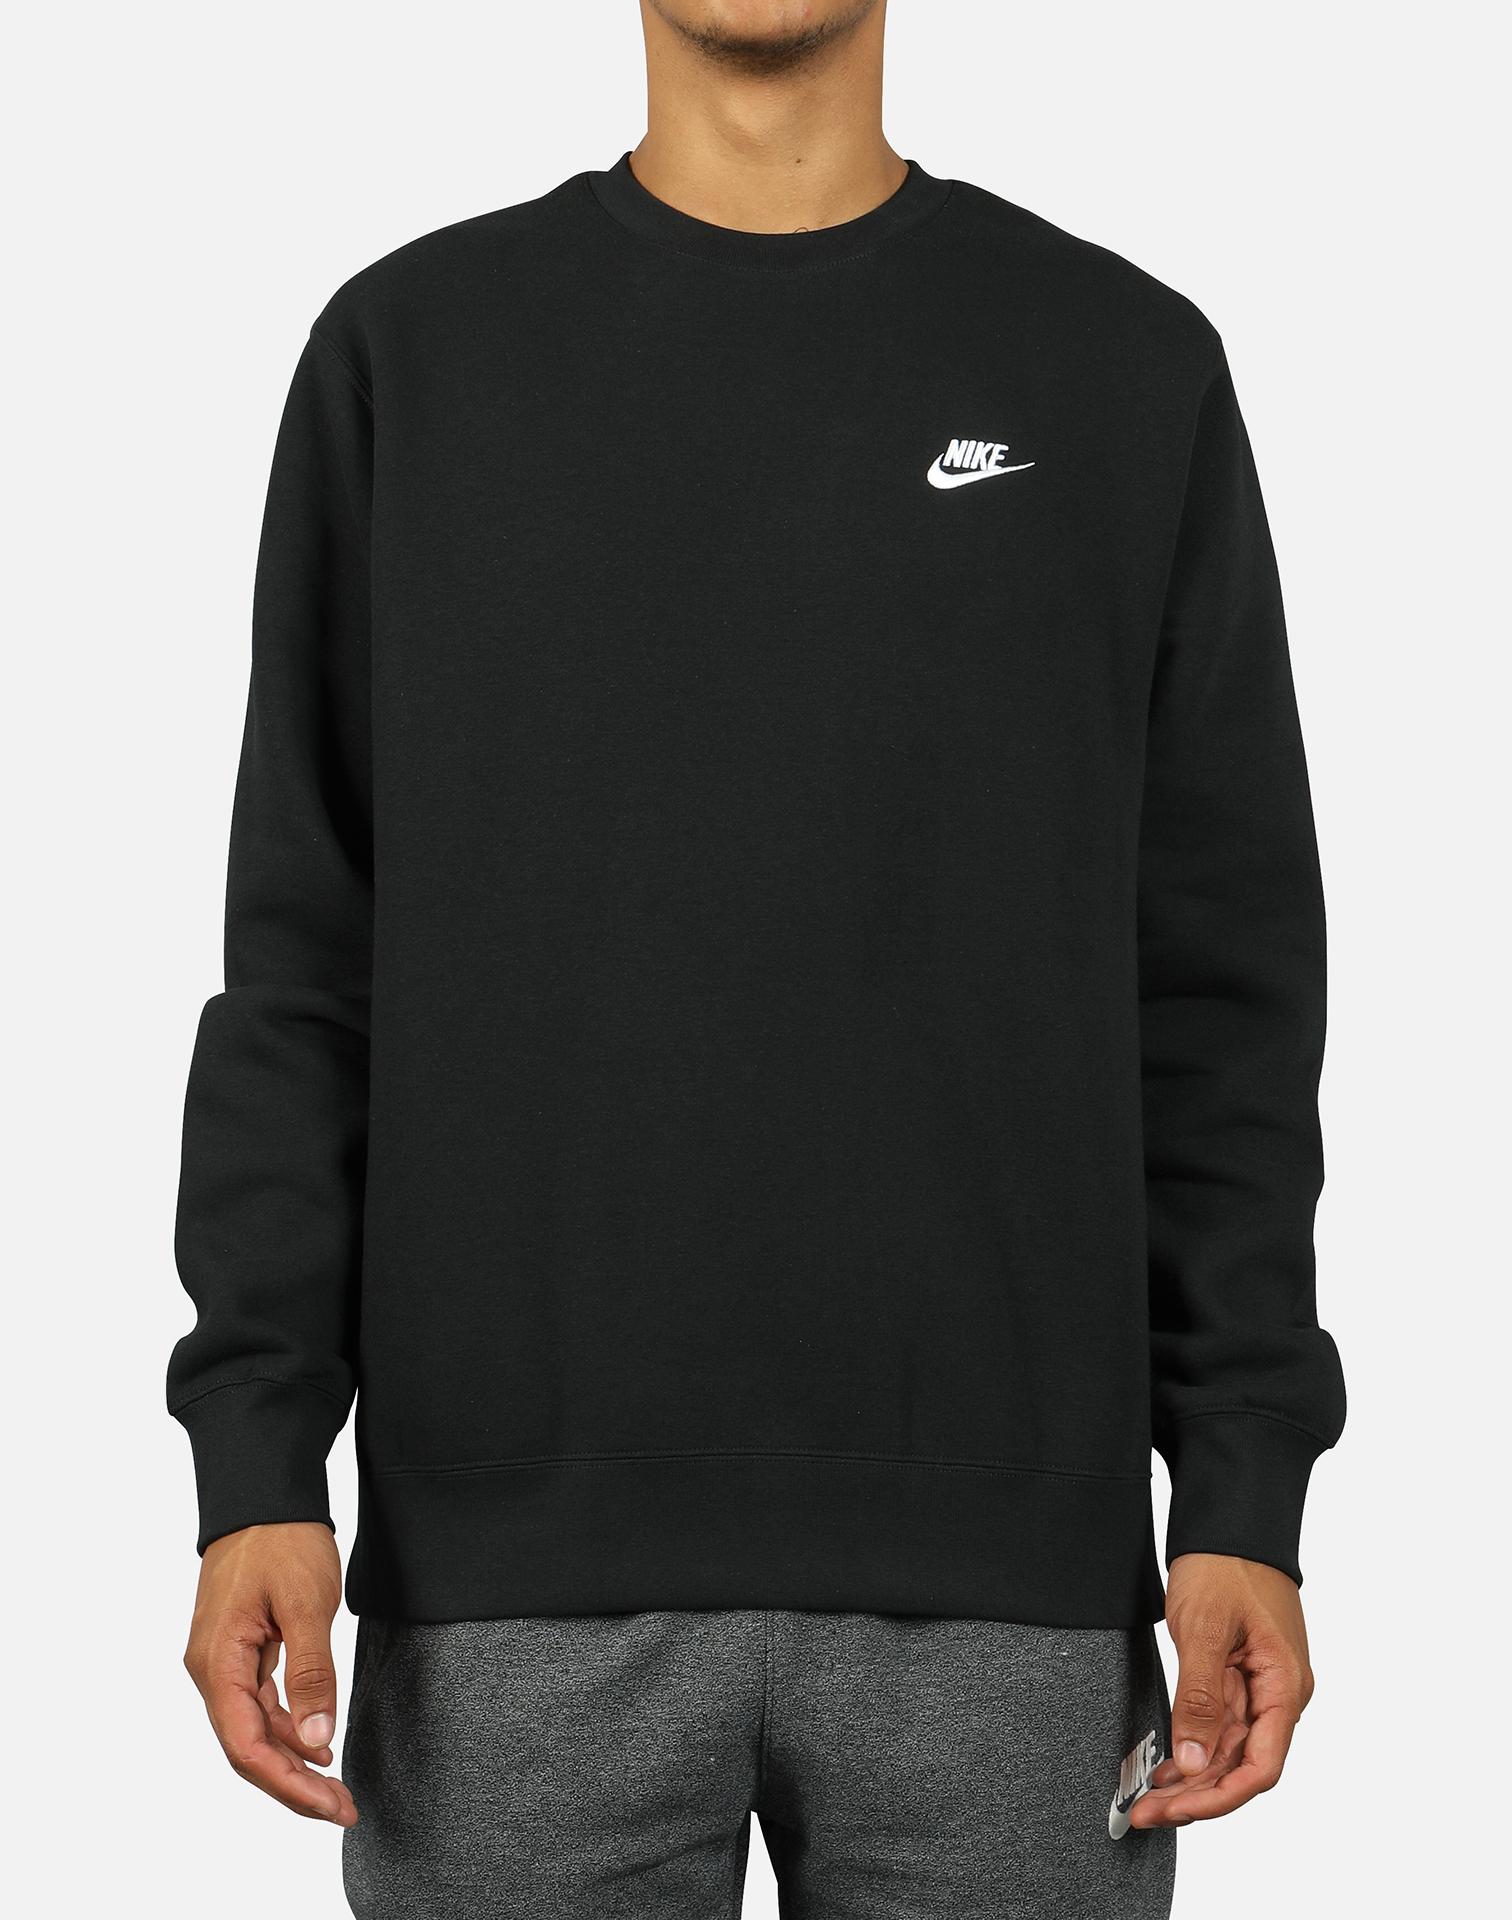 Nike Club Fleece Crew Sweatshirt in Black/White (Black) for Men - Lyst